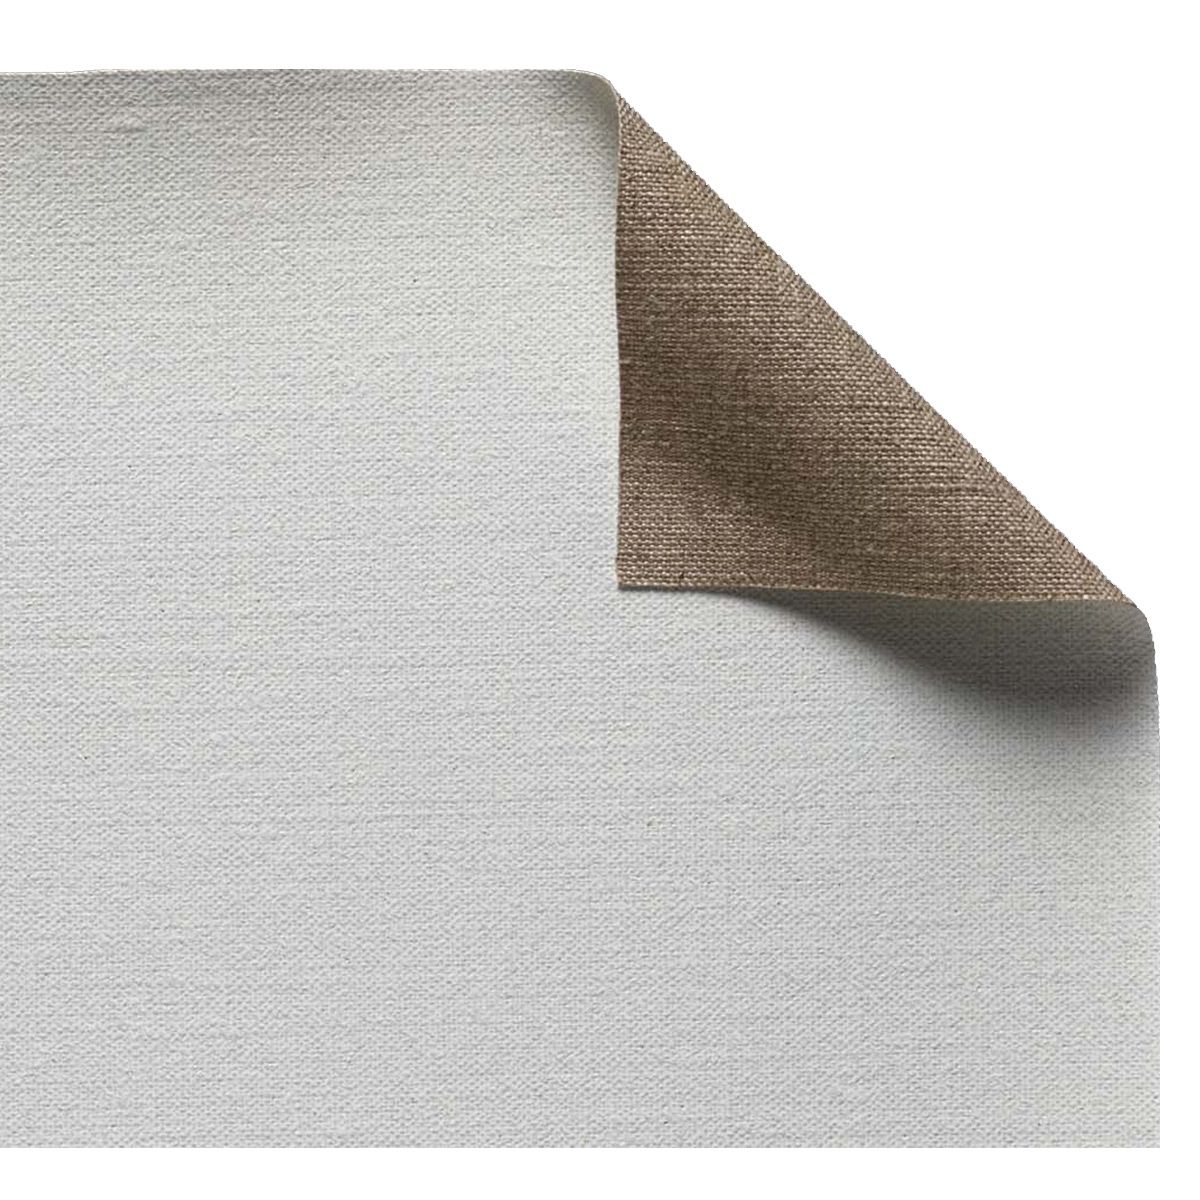 Claessens #66 Single Oil Primed Linen Canvas - Medium Texture